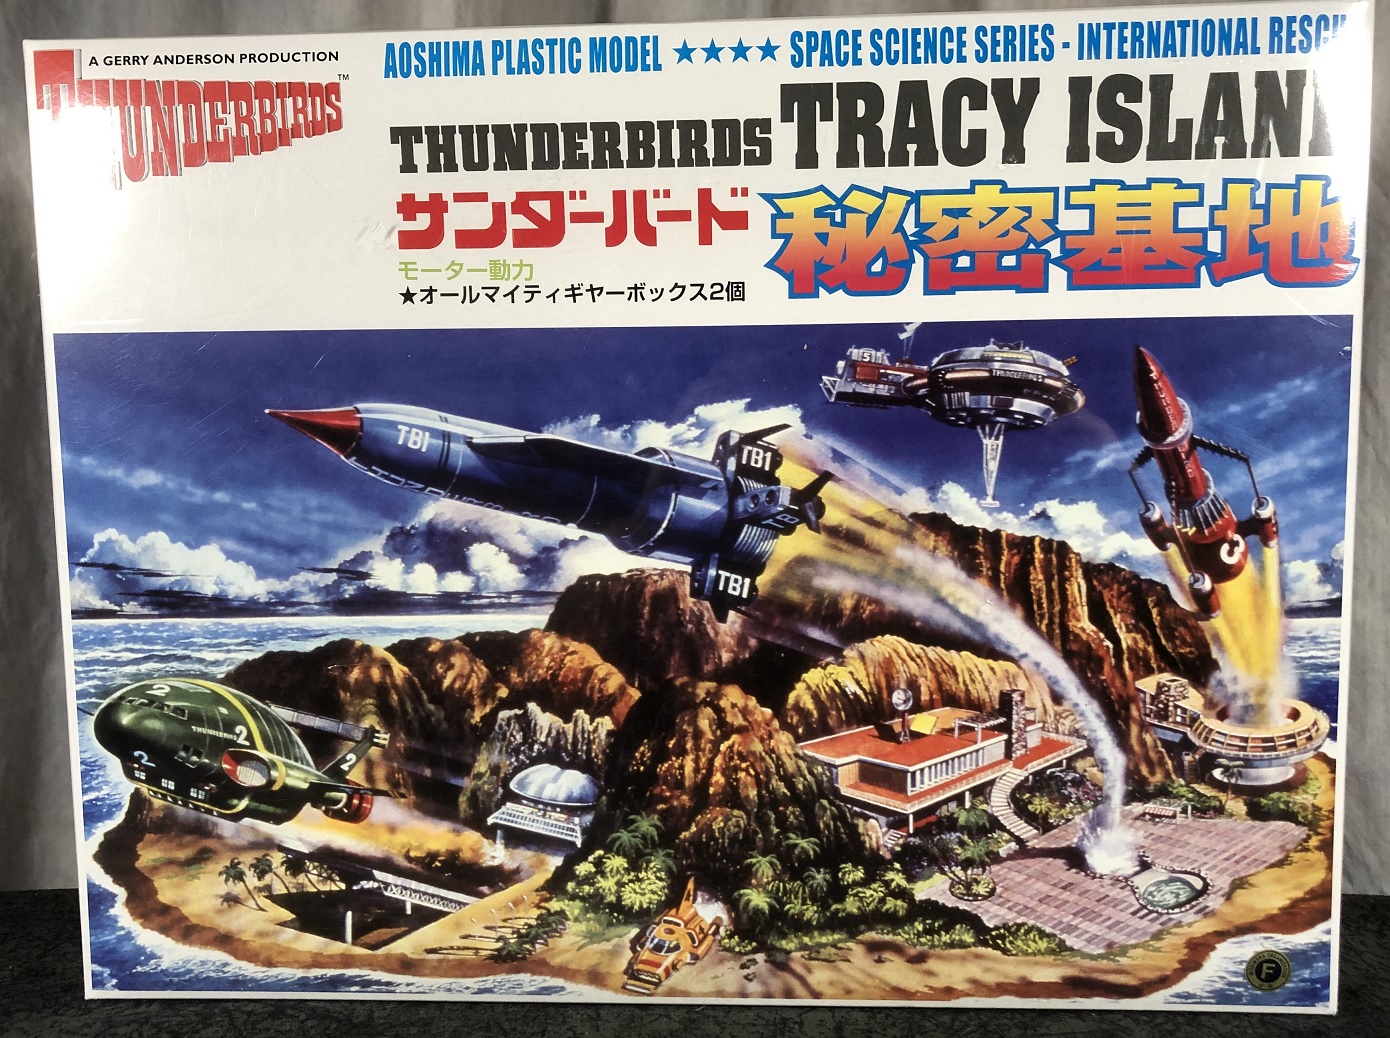 Thunderbirds Tracy Island Diorama Plastic Model Kit 